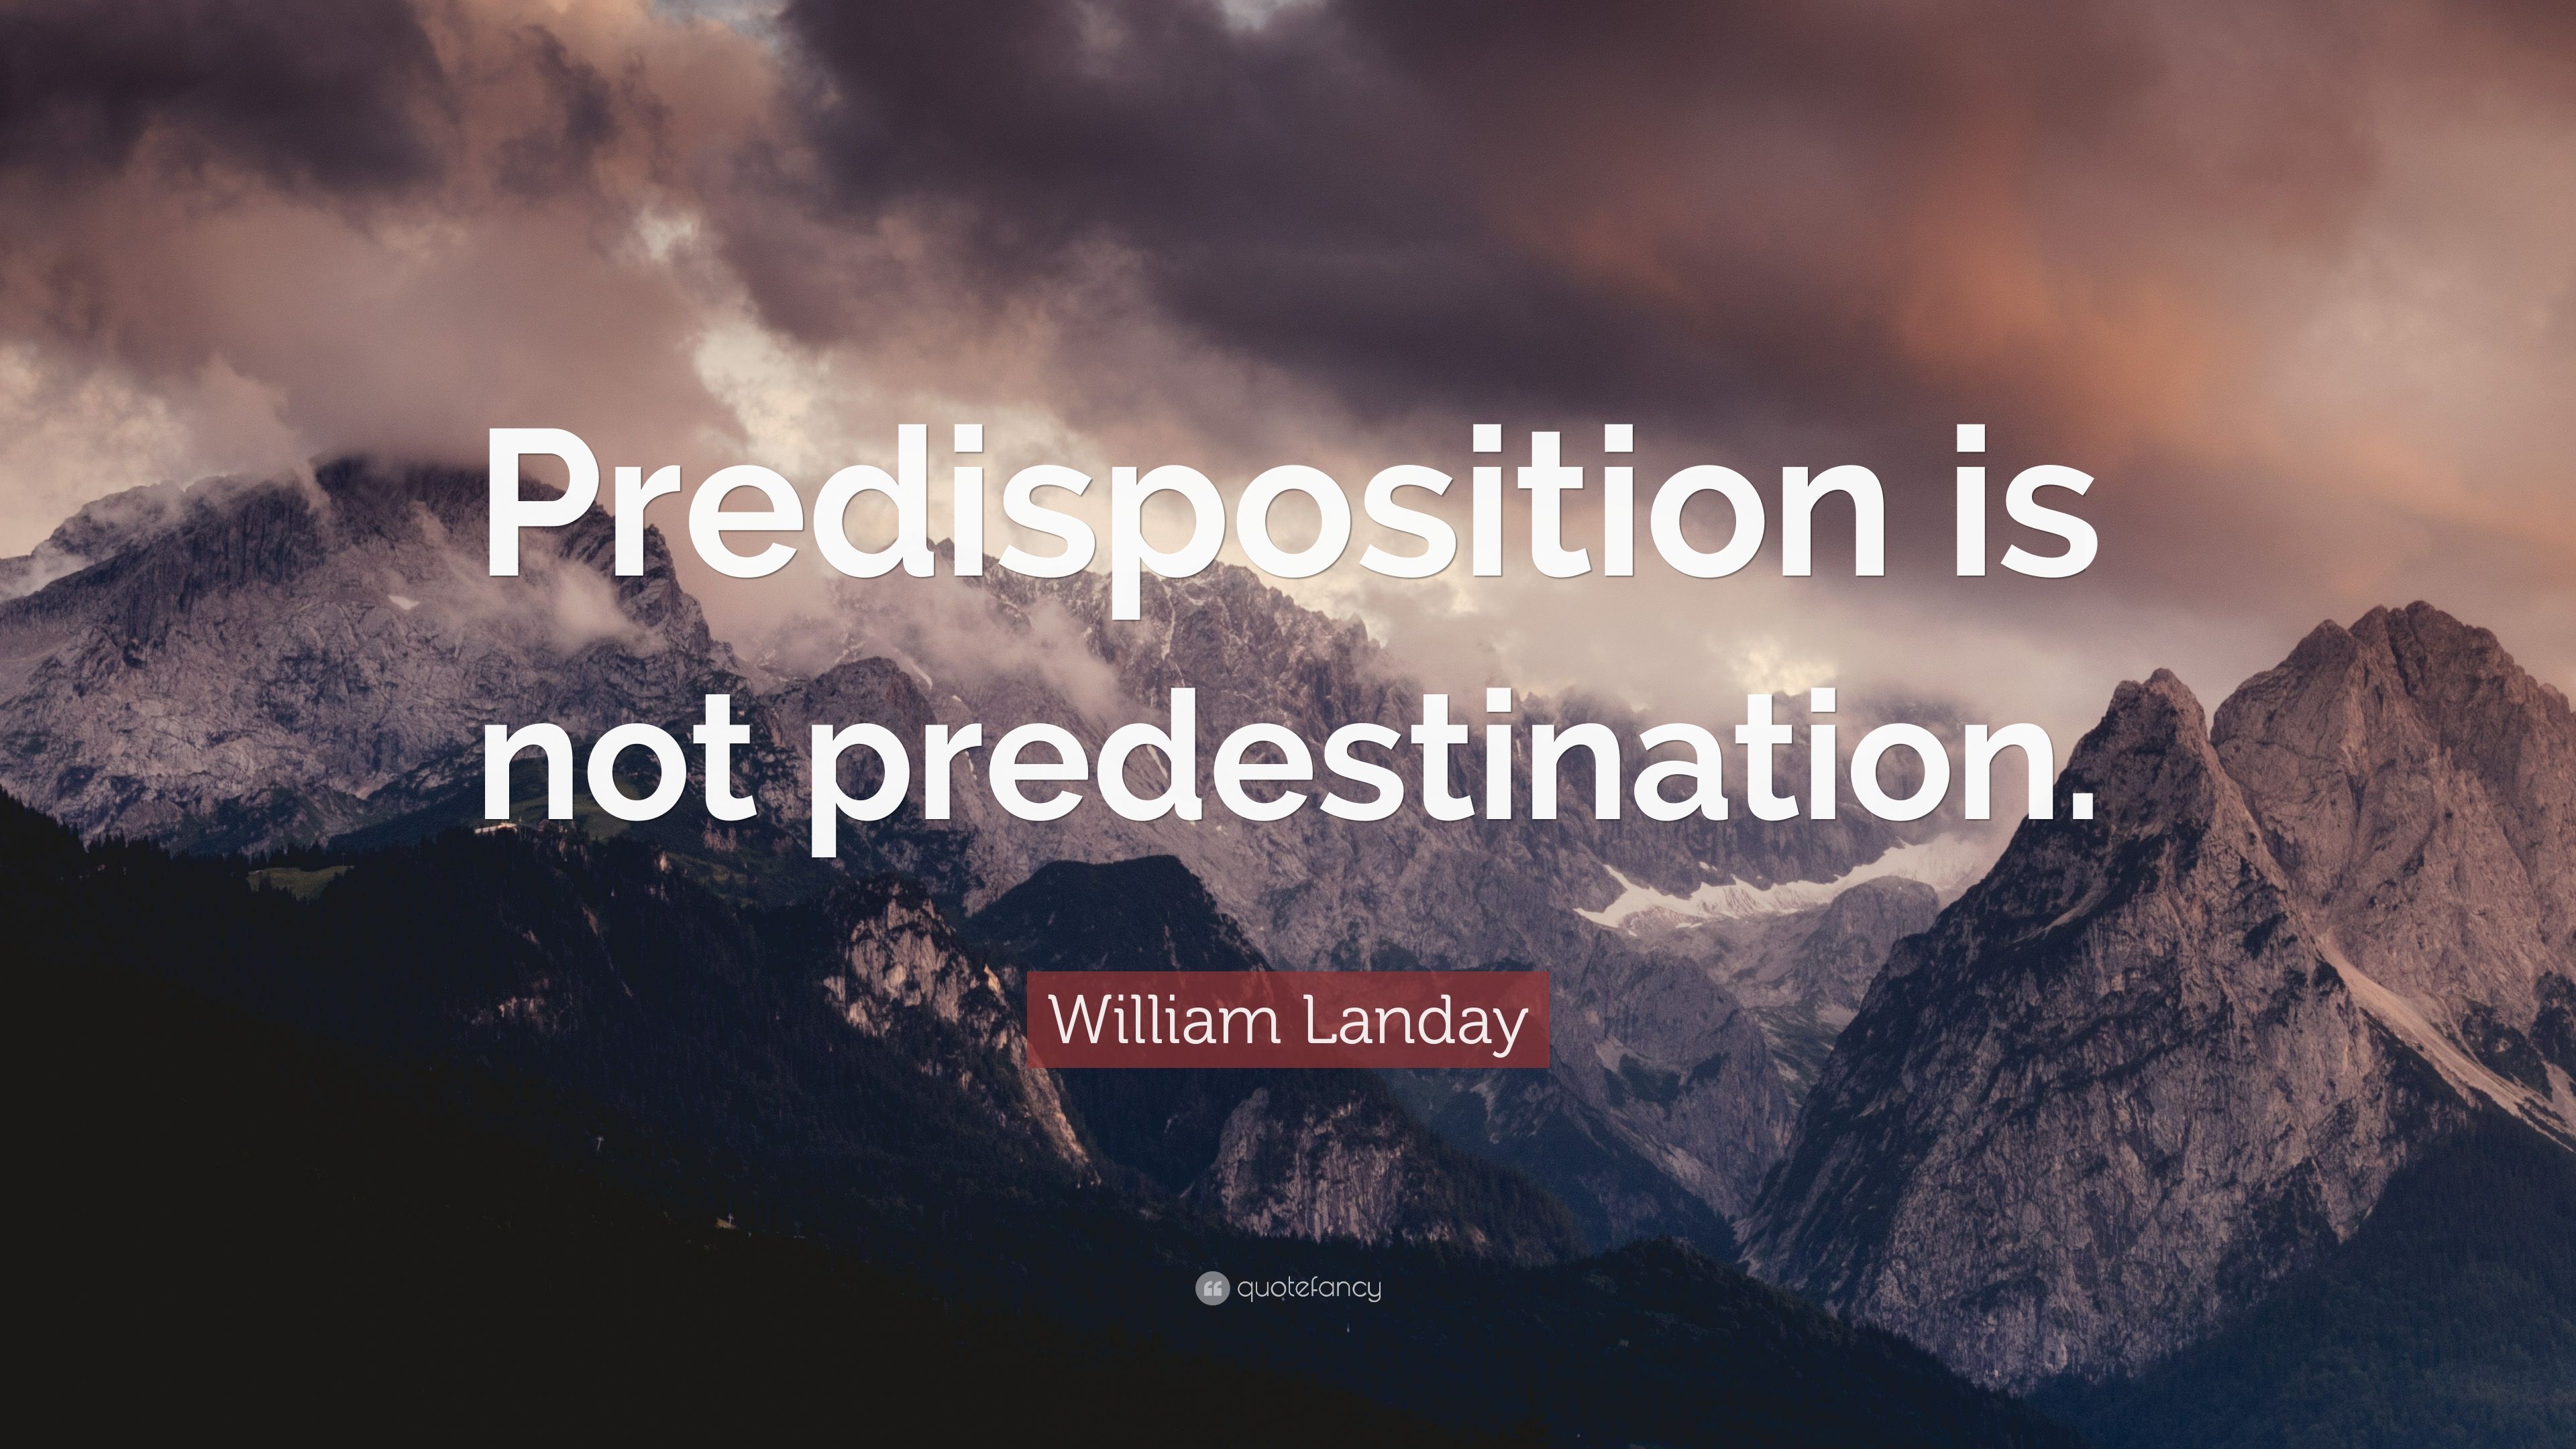 William Landay Quote: “Predisposition is not predestination.” 9